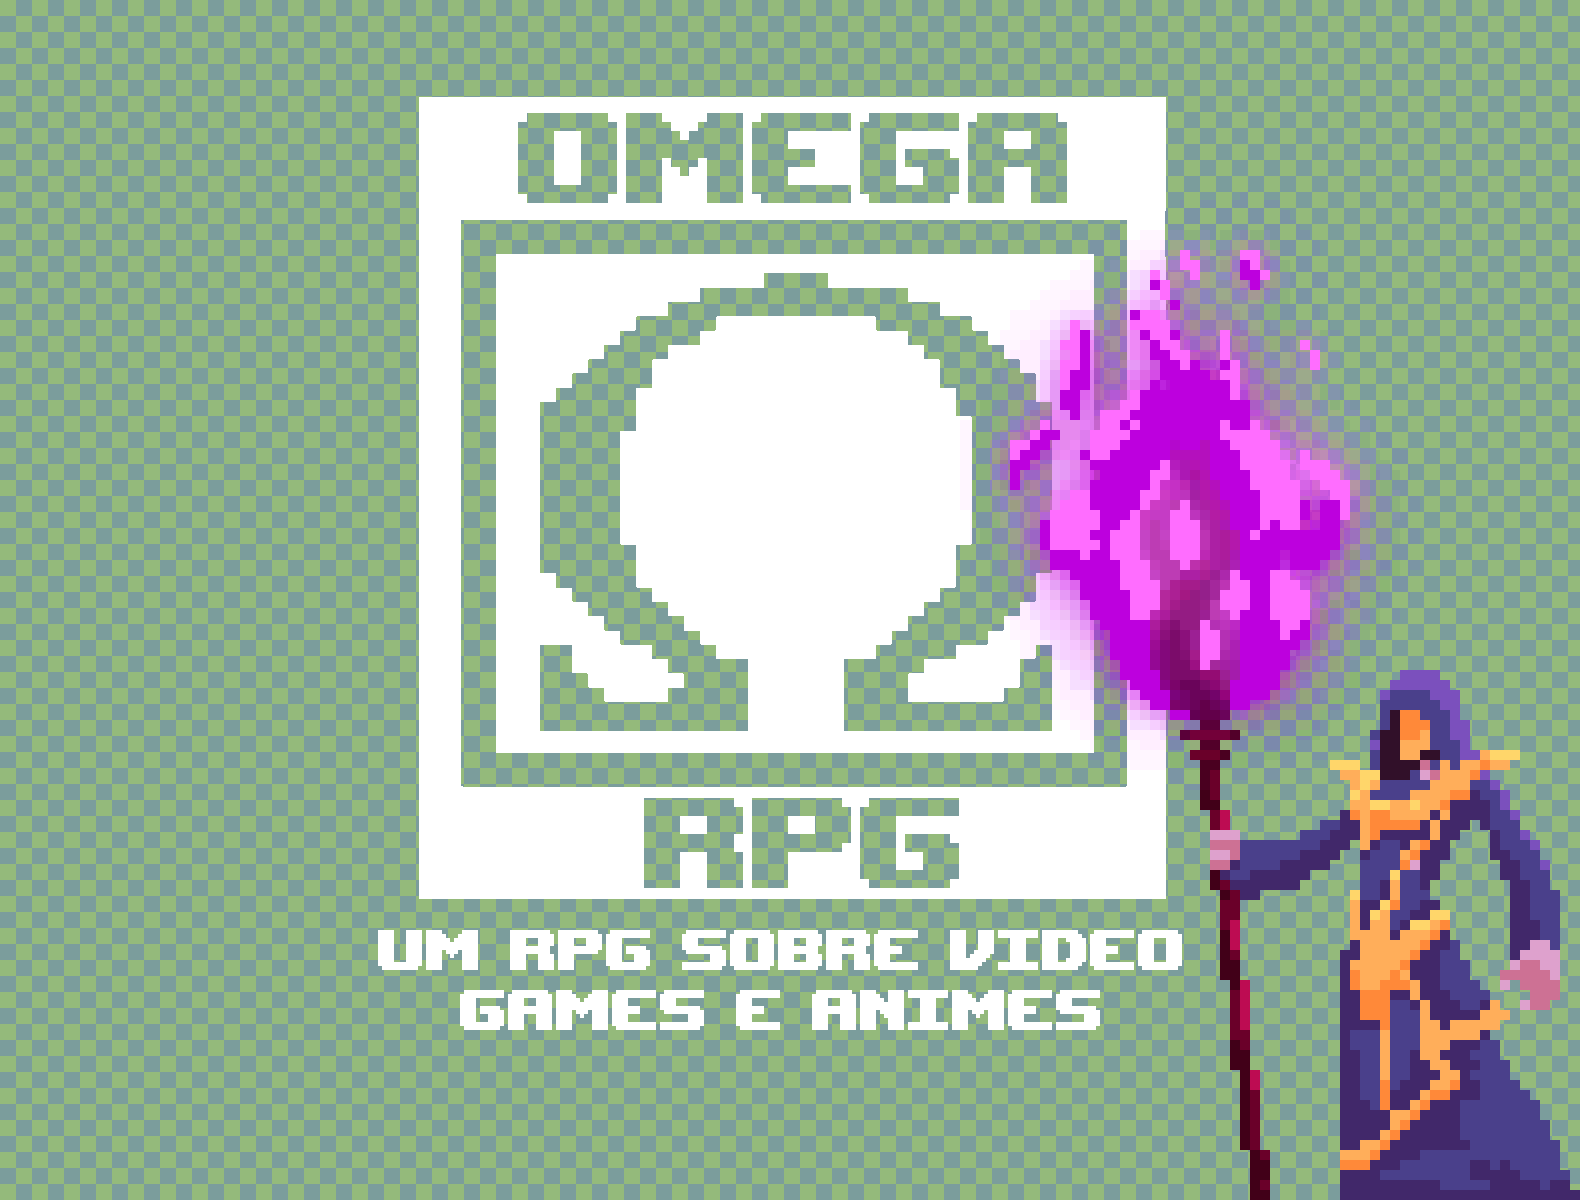 Versão 1.0.2 - OMEGA RPG by Third Vision Games